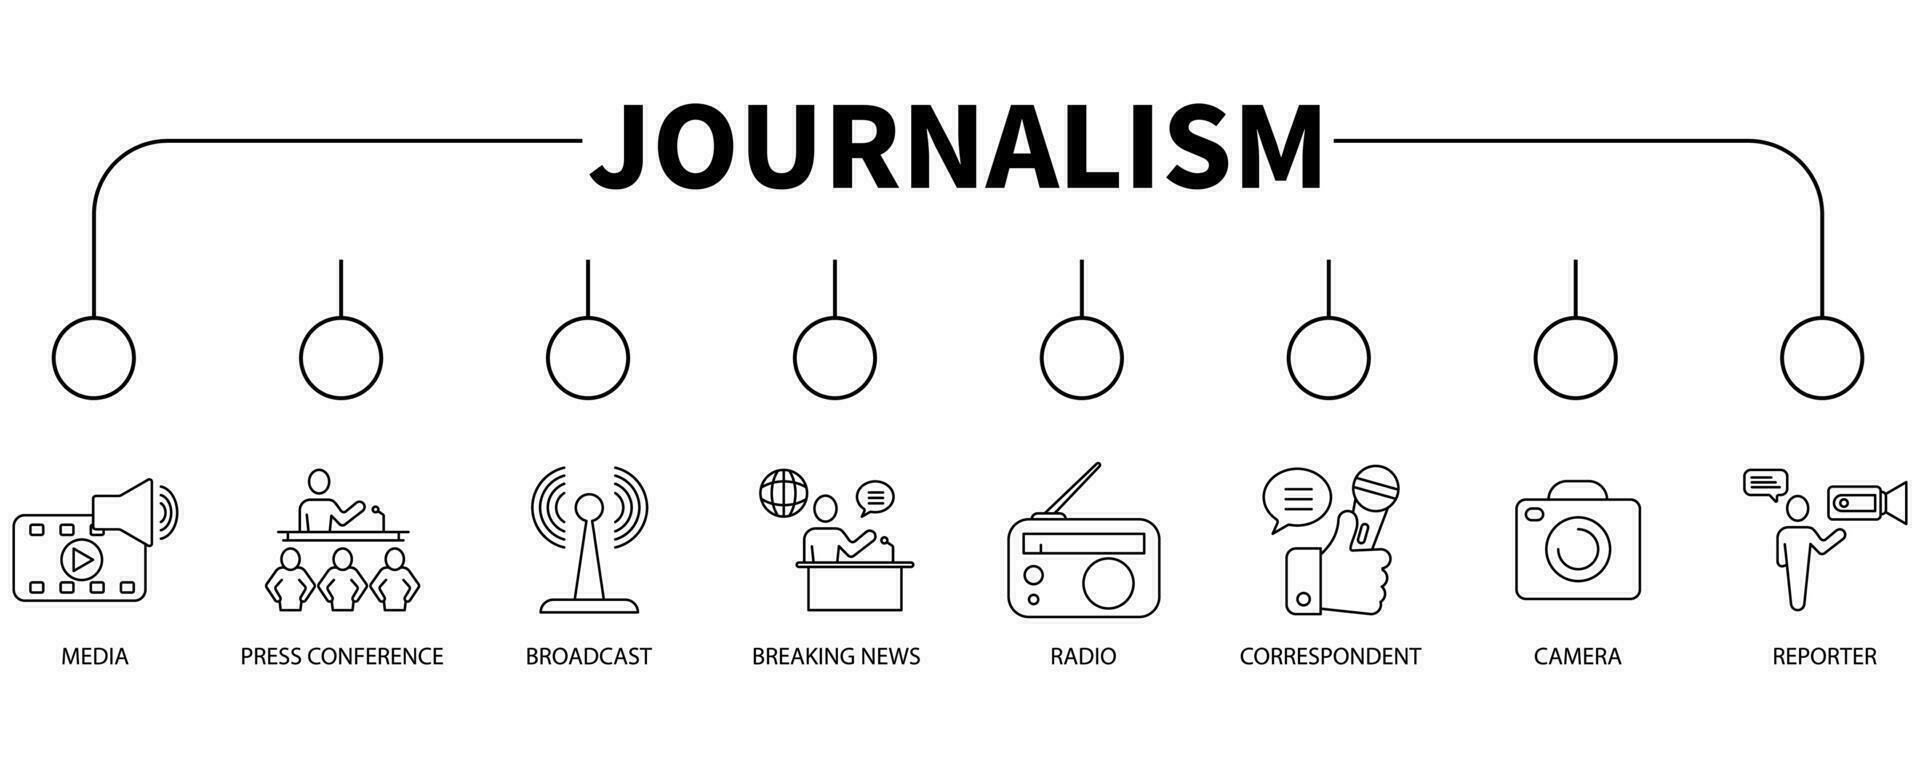 Journalism banner web icon vector illustration concept